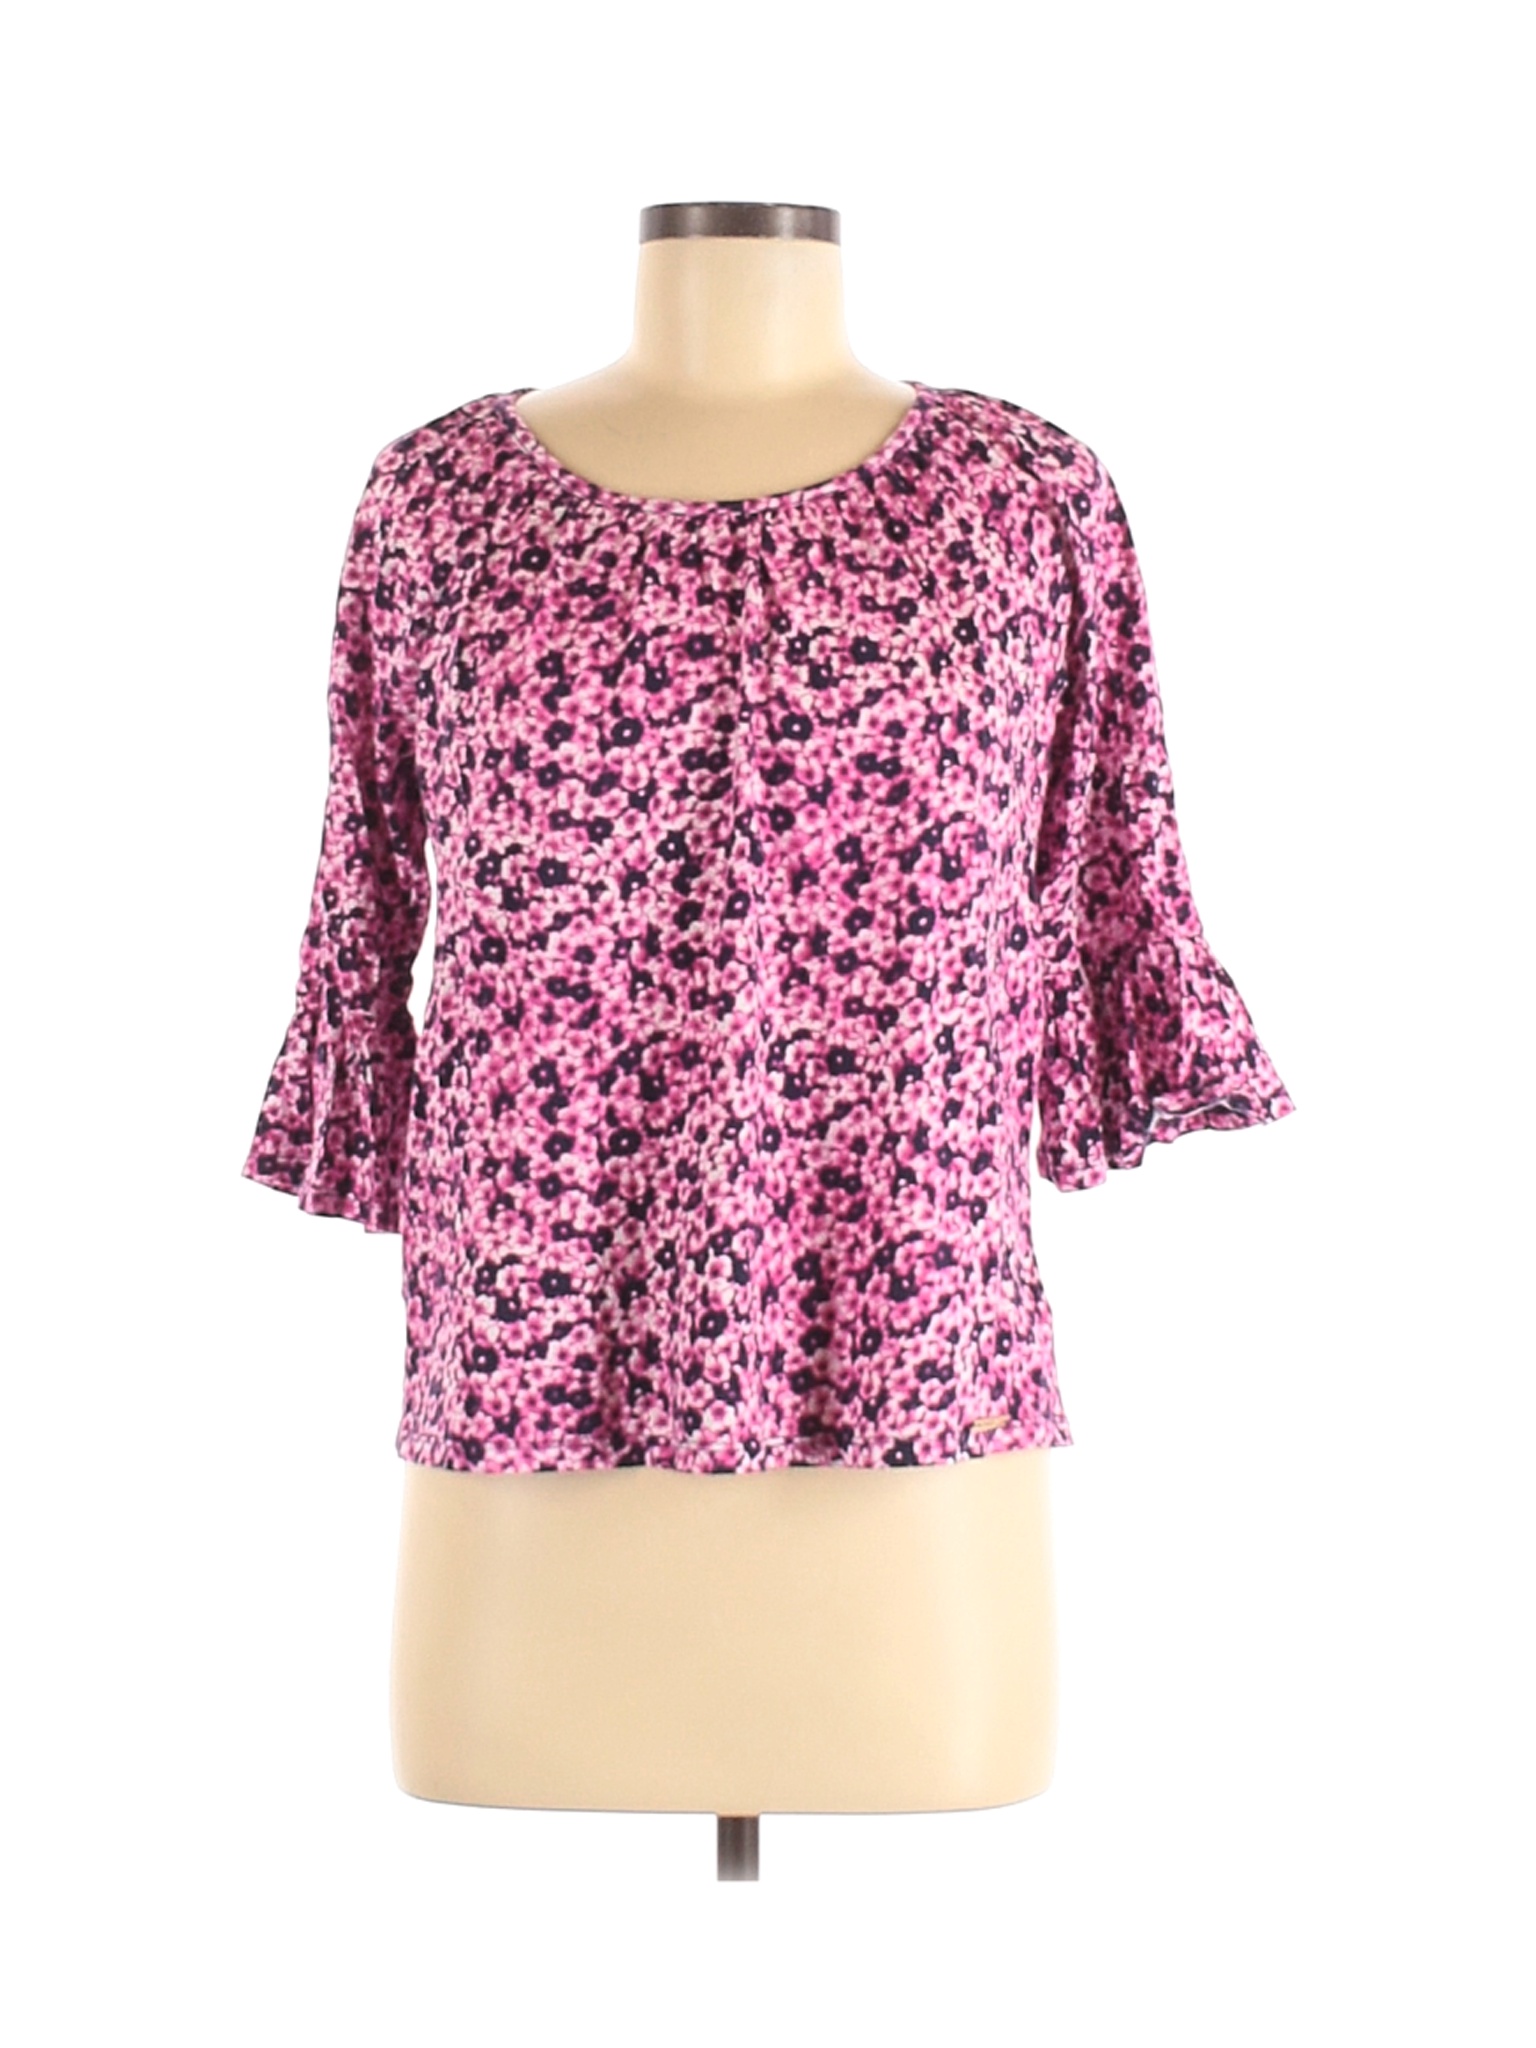 MICHAEL Michael Kors Women Pink Short Sleeve Top M | eBay